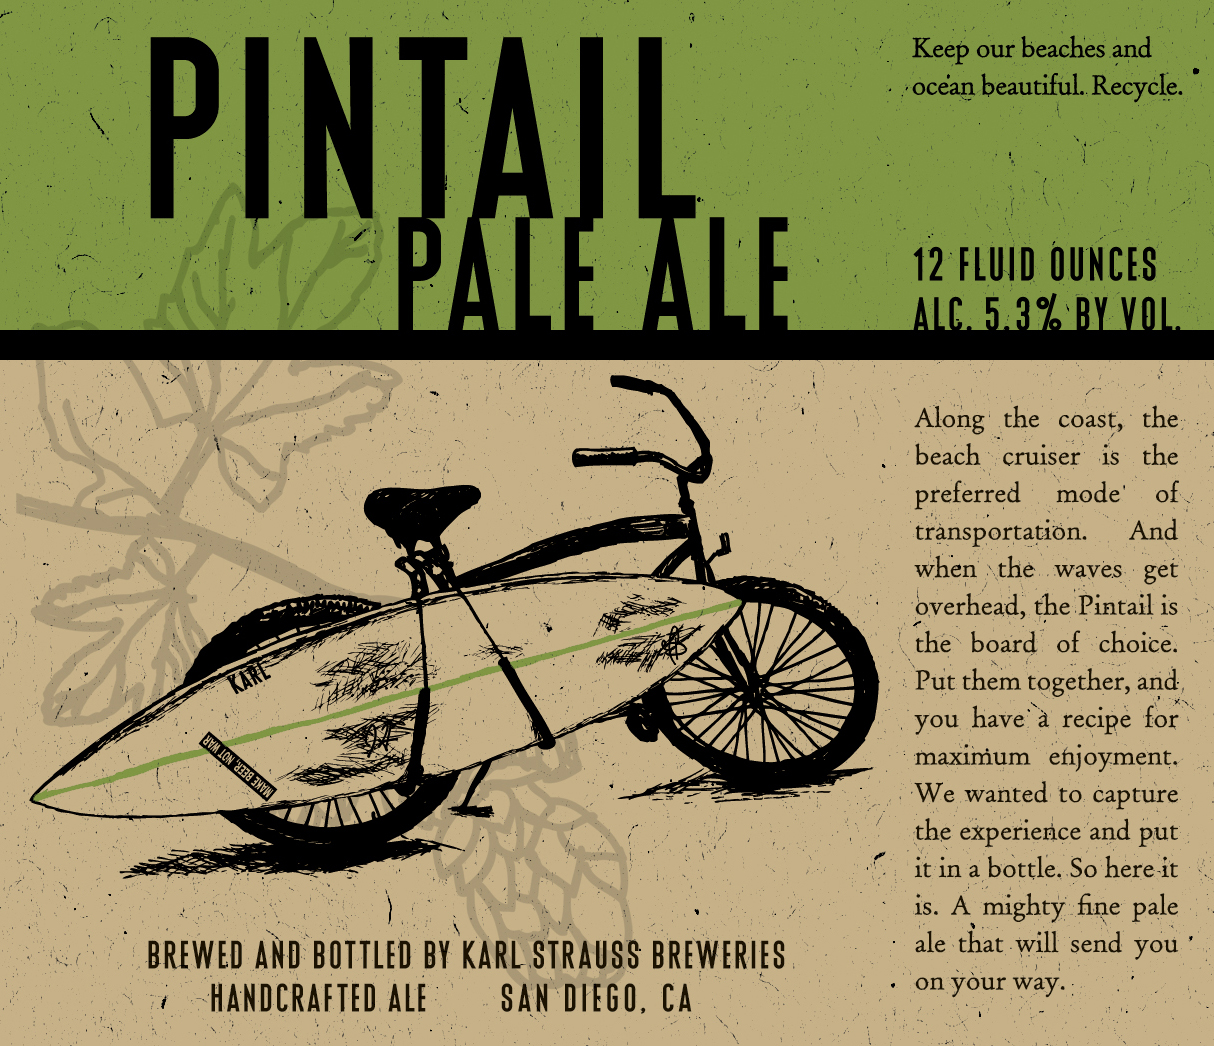 Karl Strauss Pintail Pale Ale